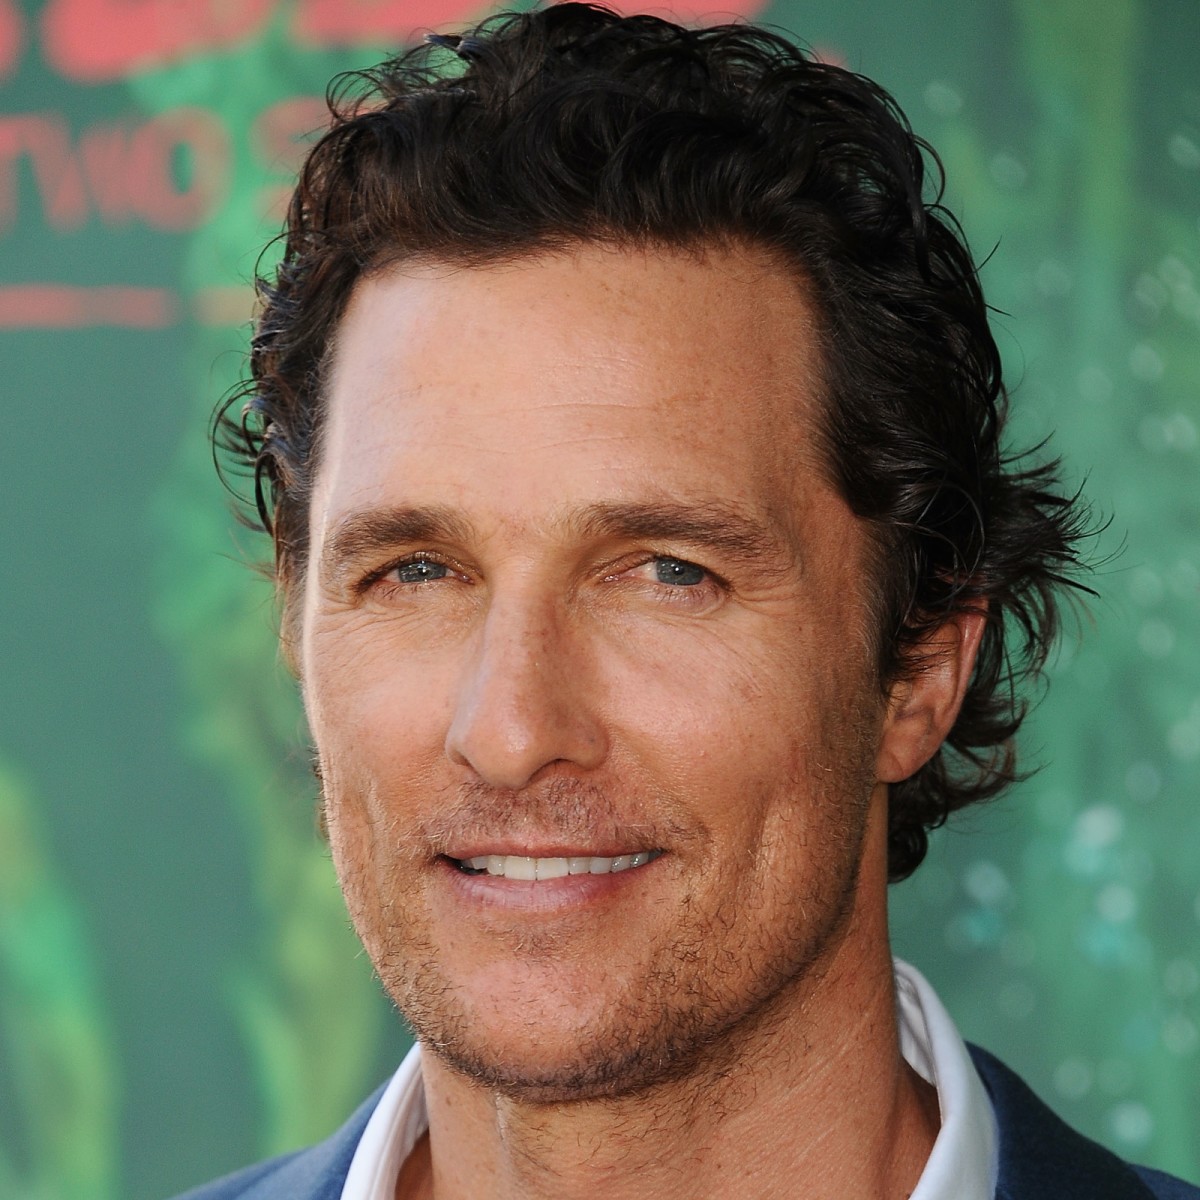 How tall is Matthew McConaughey?